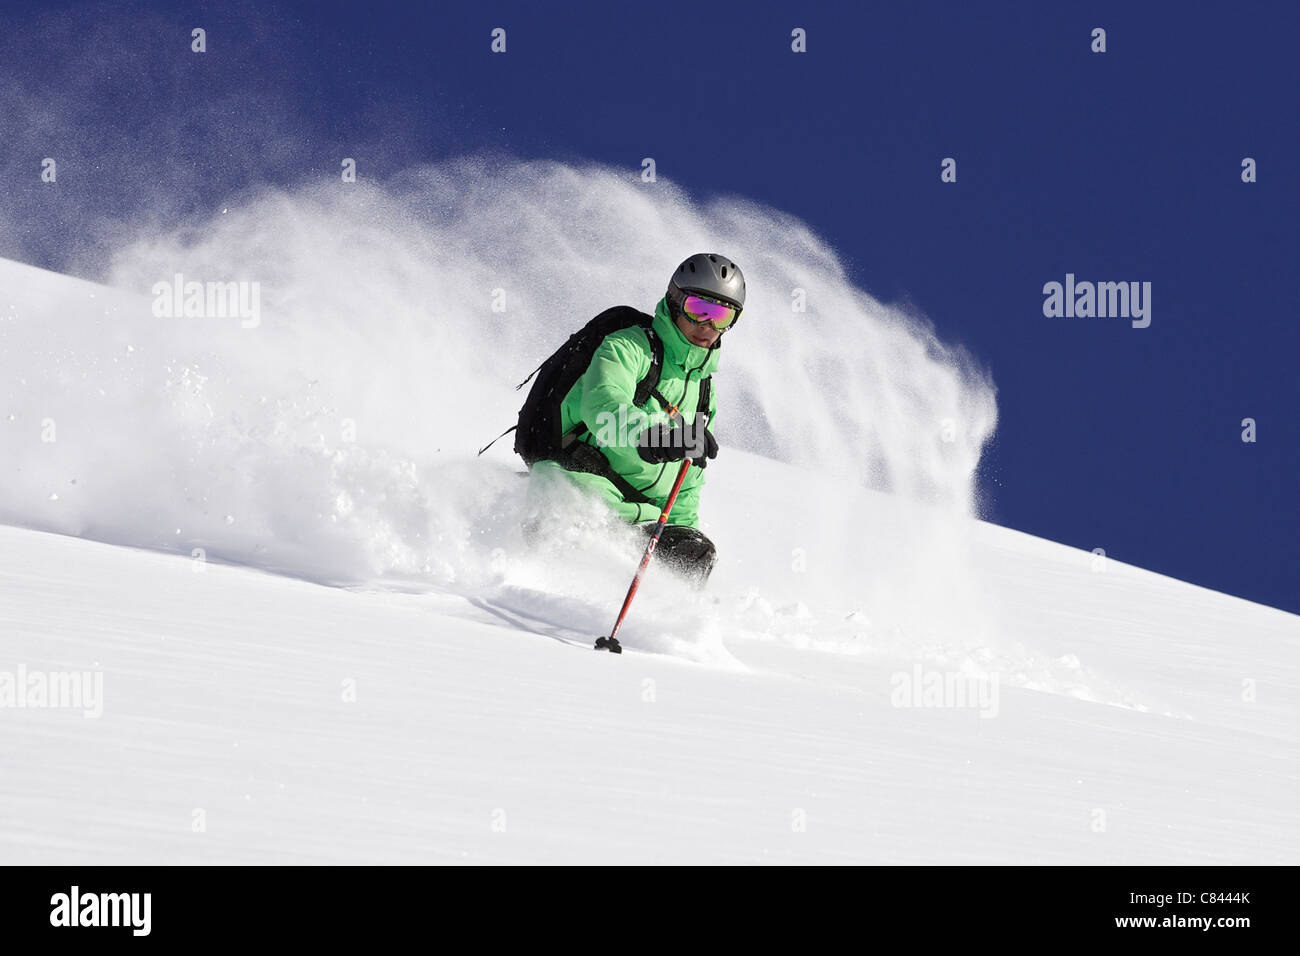 Skier on snowy mountain slope Stock Photo - Alamy